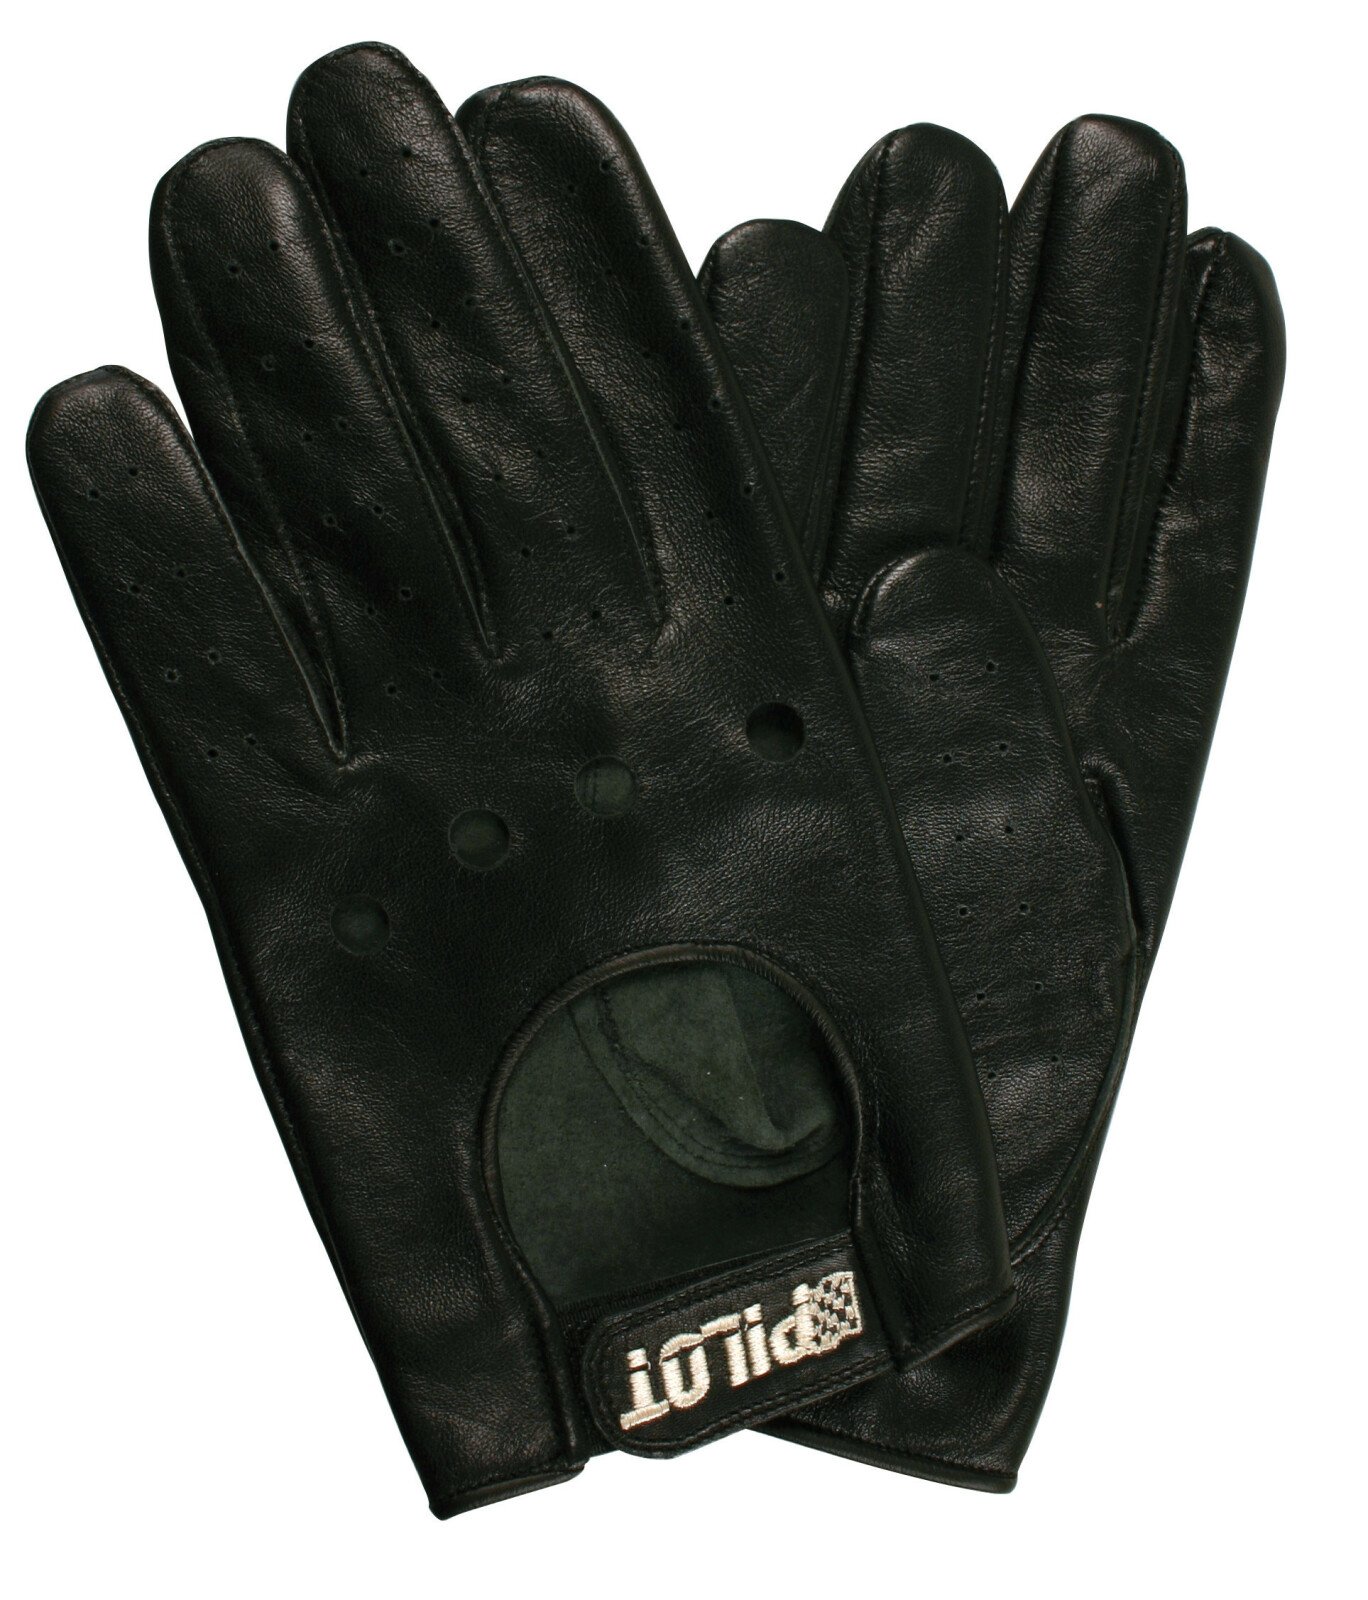 Pilot-3 driving gloves - XL - Black thumb